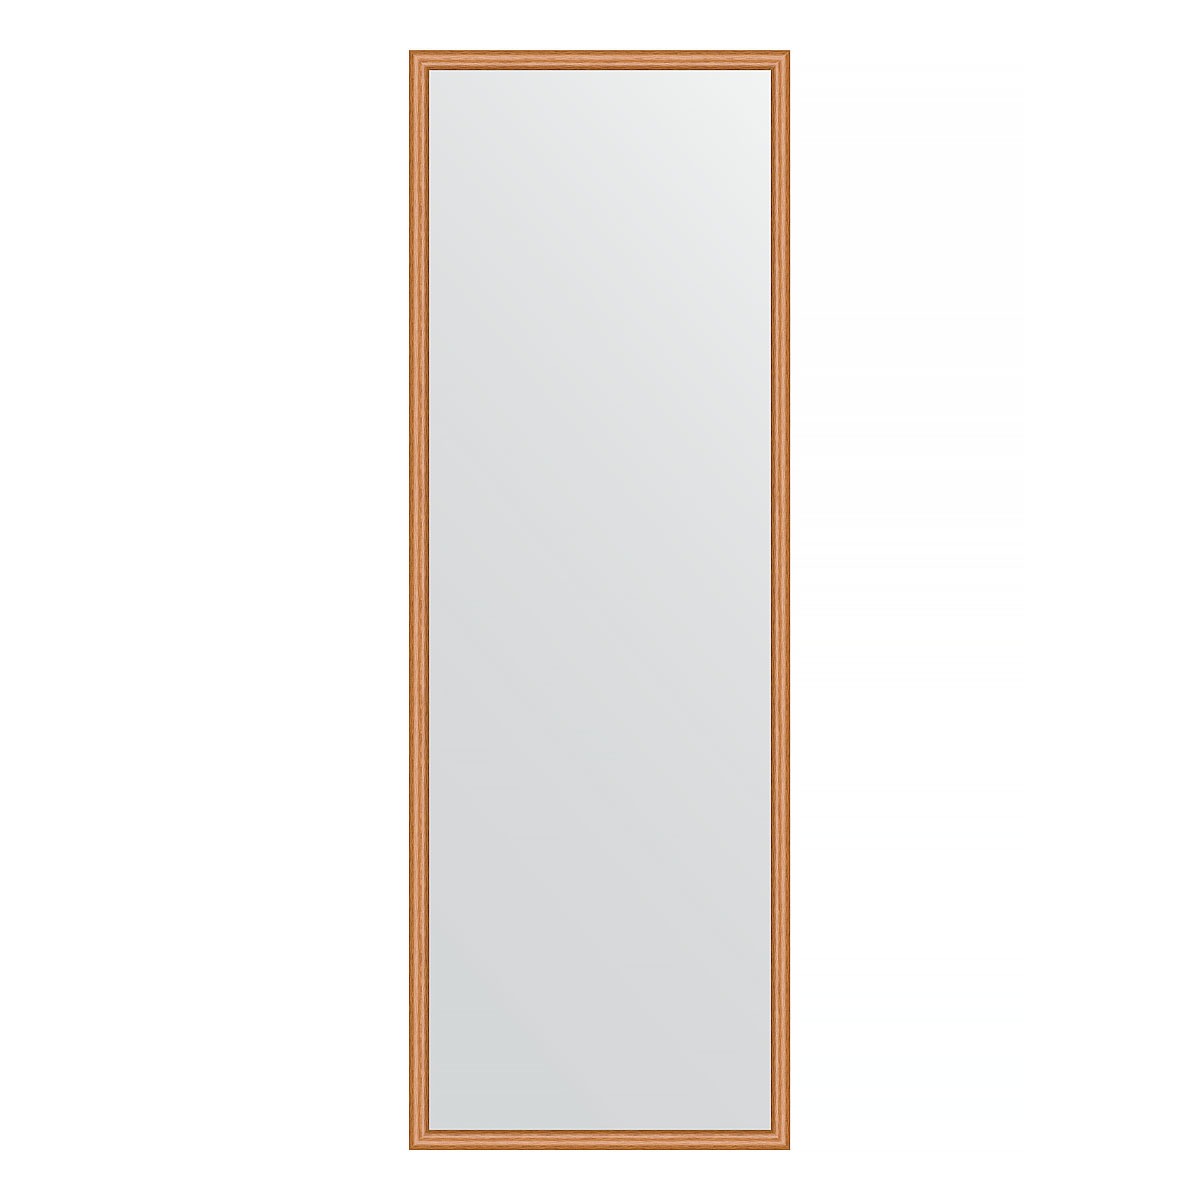 Зеркало в багетной раме Evoform вишня 22 мм 48х138 см зеркало evoform в багетной раме 56х146см bx 1076 bx 1076